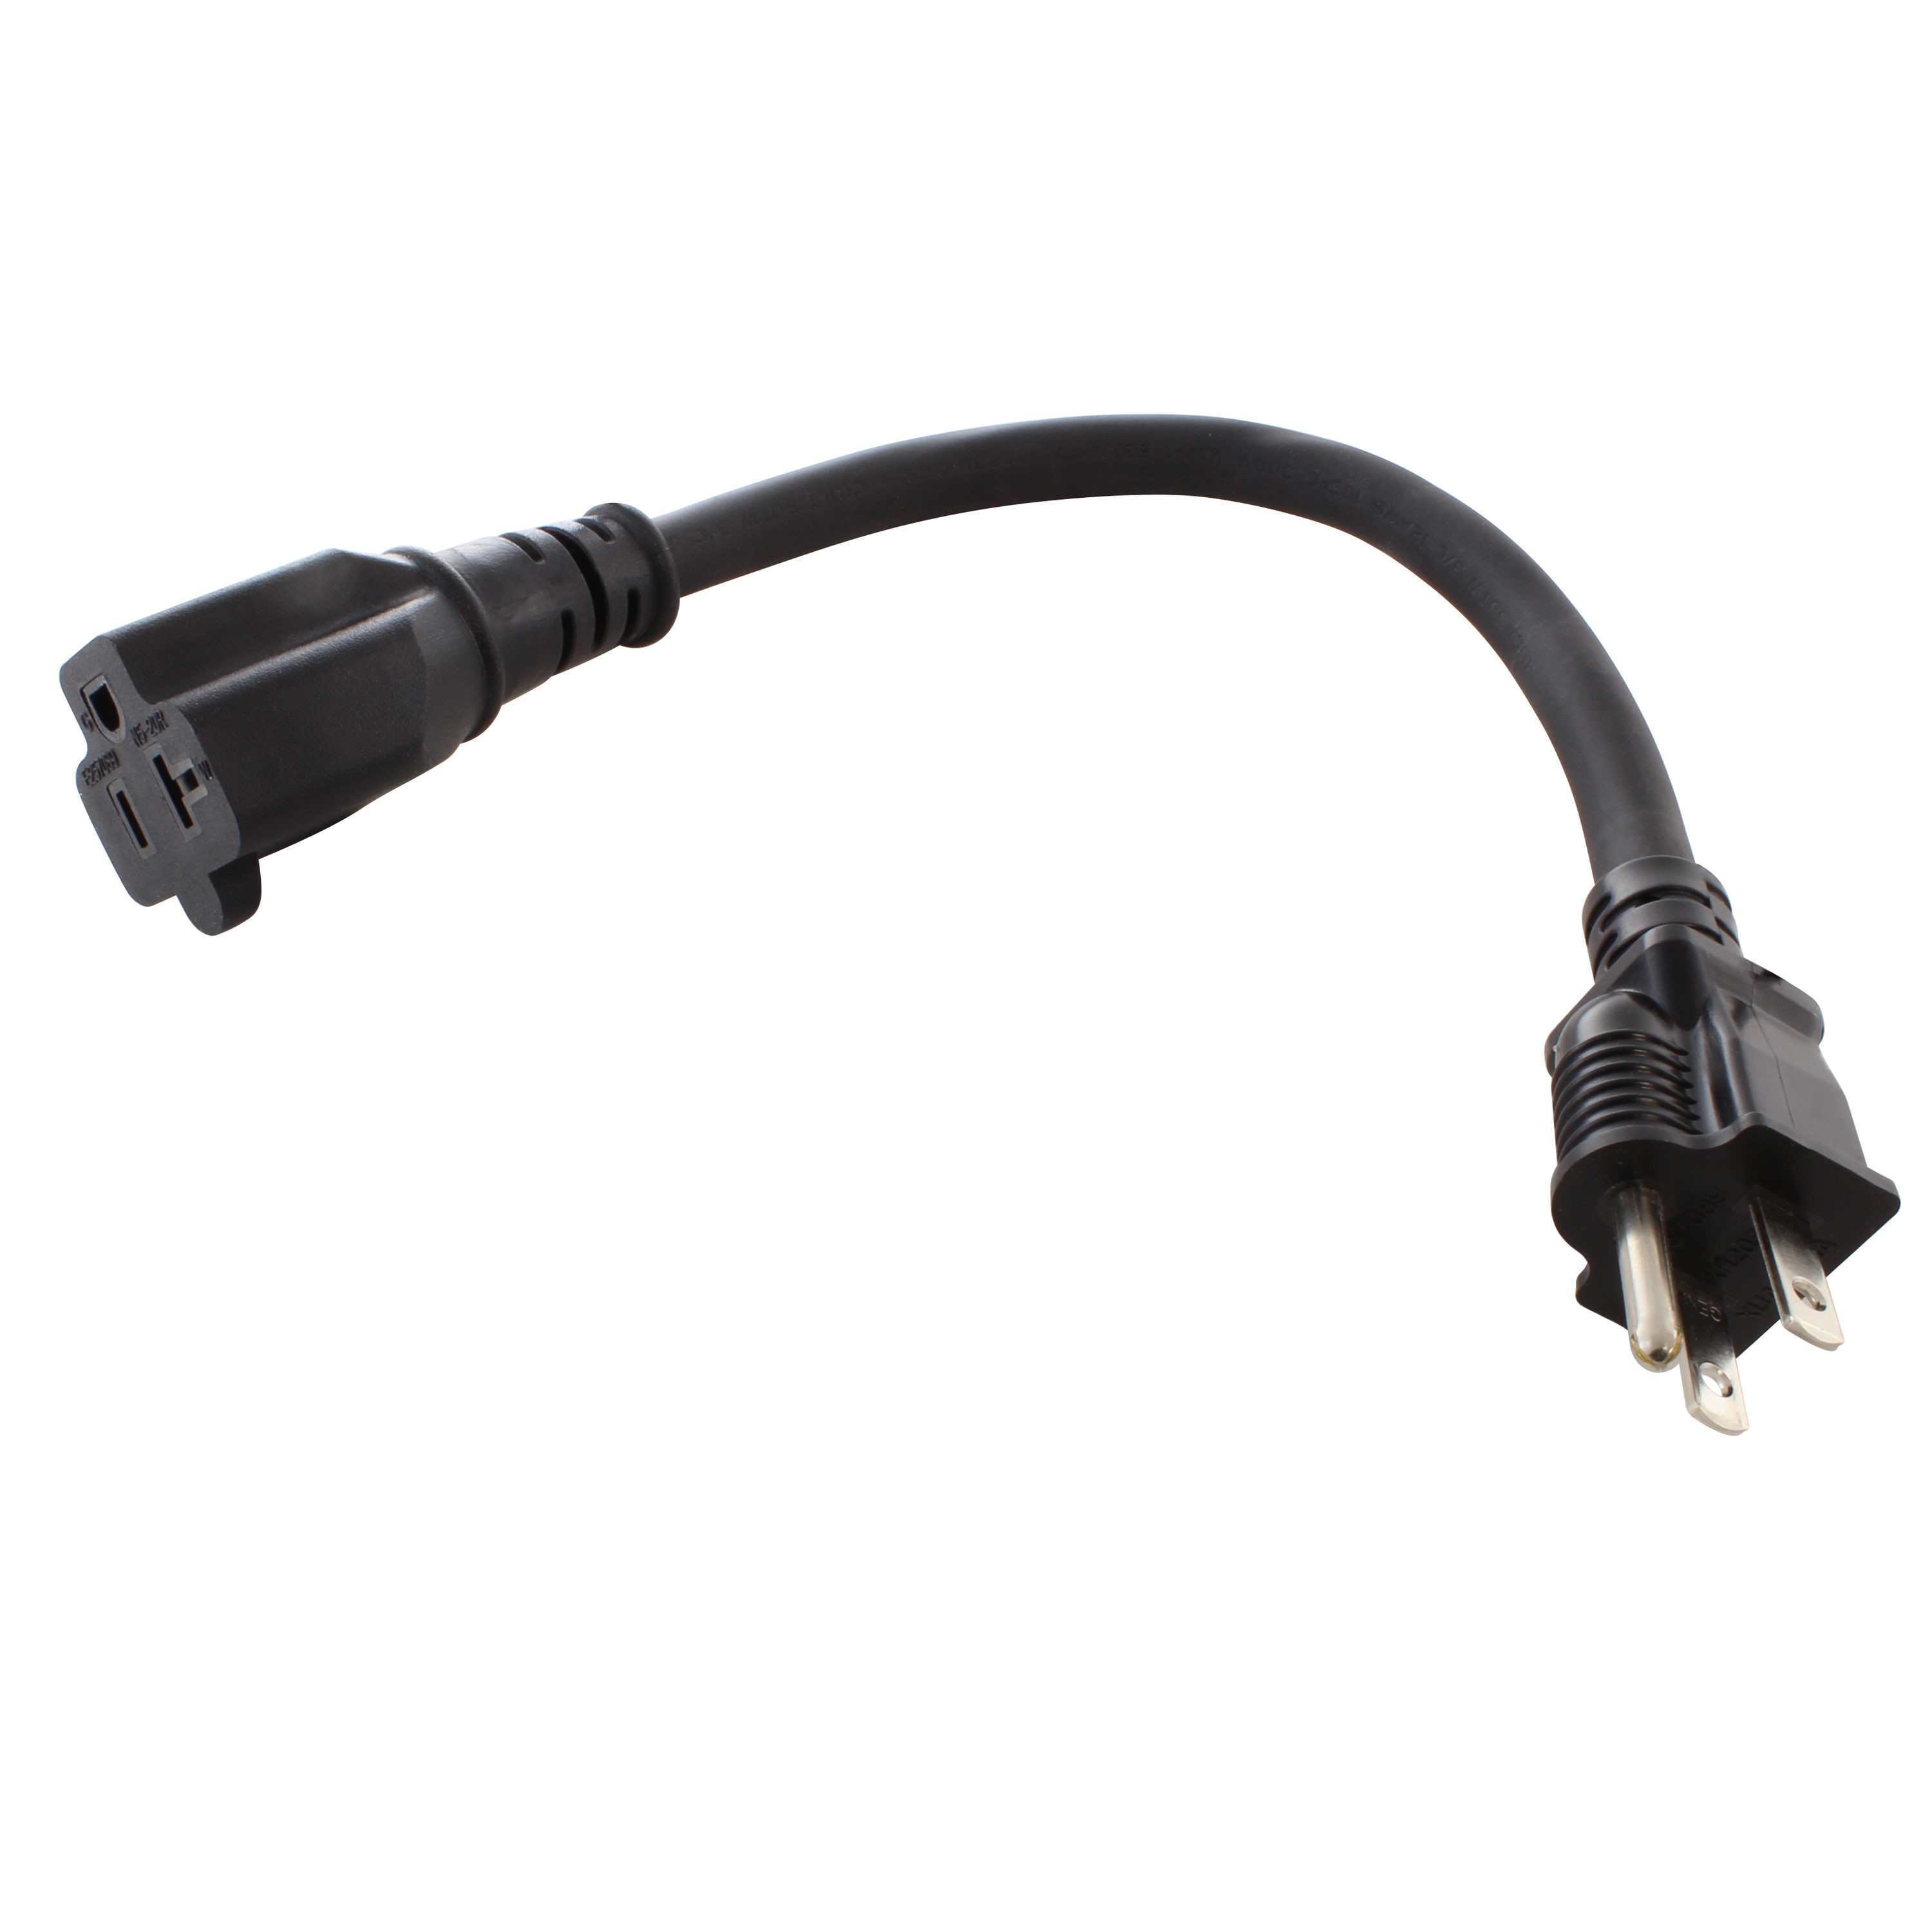 125v, 15 Amp Male Plug Connector